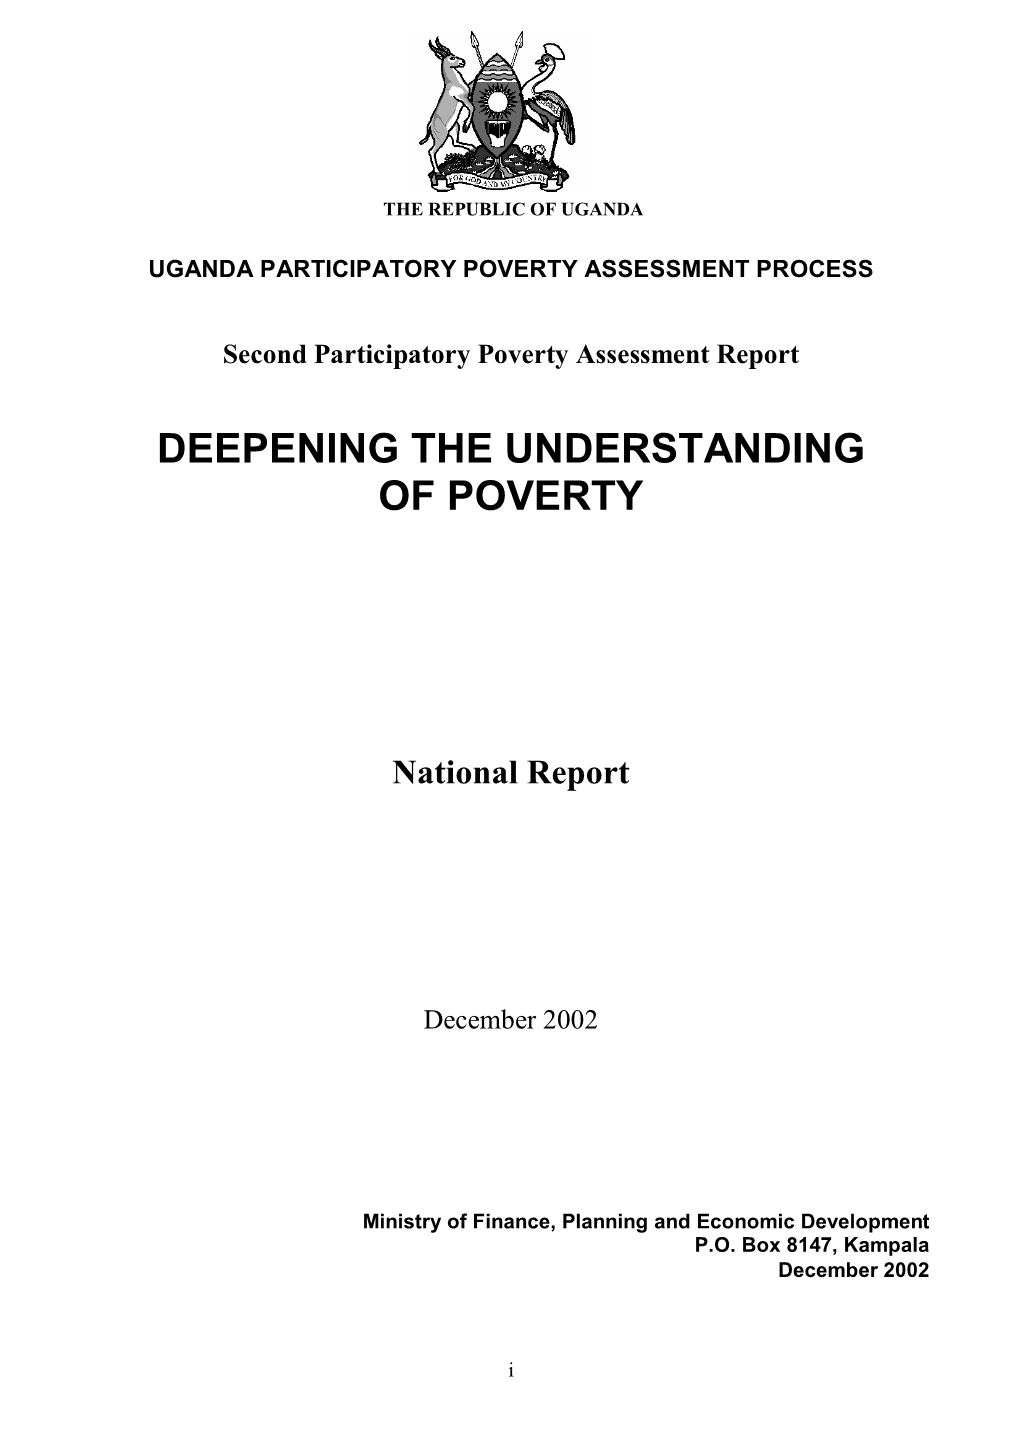 Deepening the Understanding of Poverty